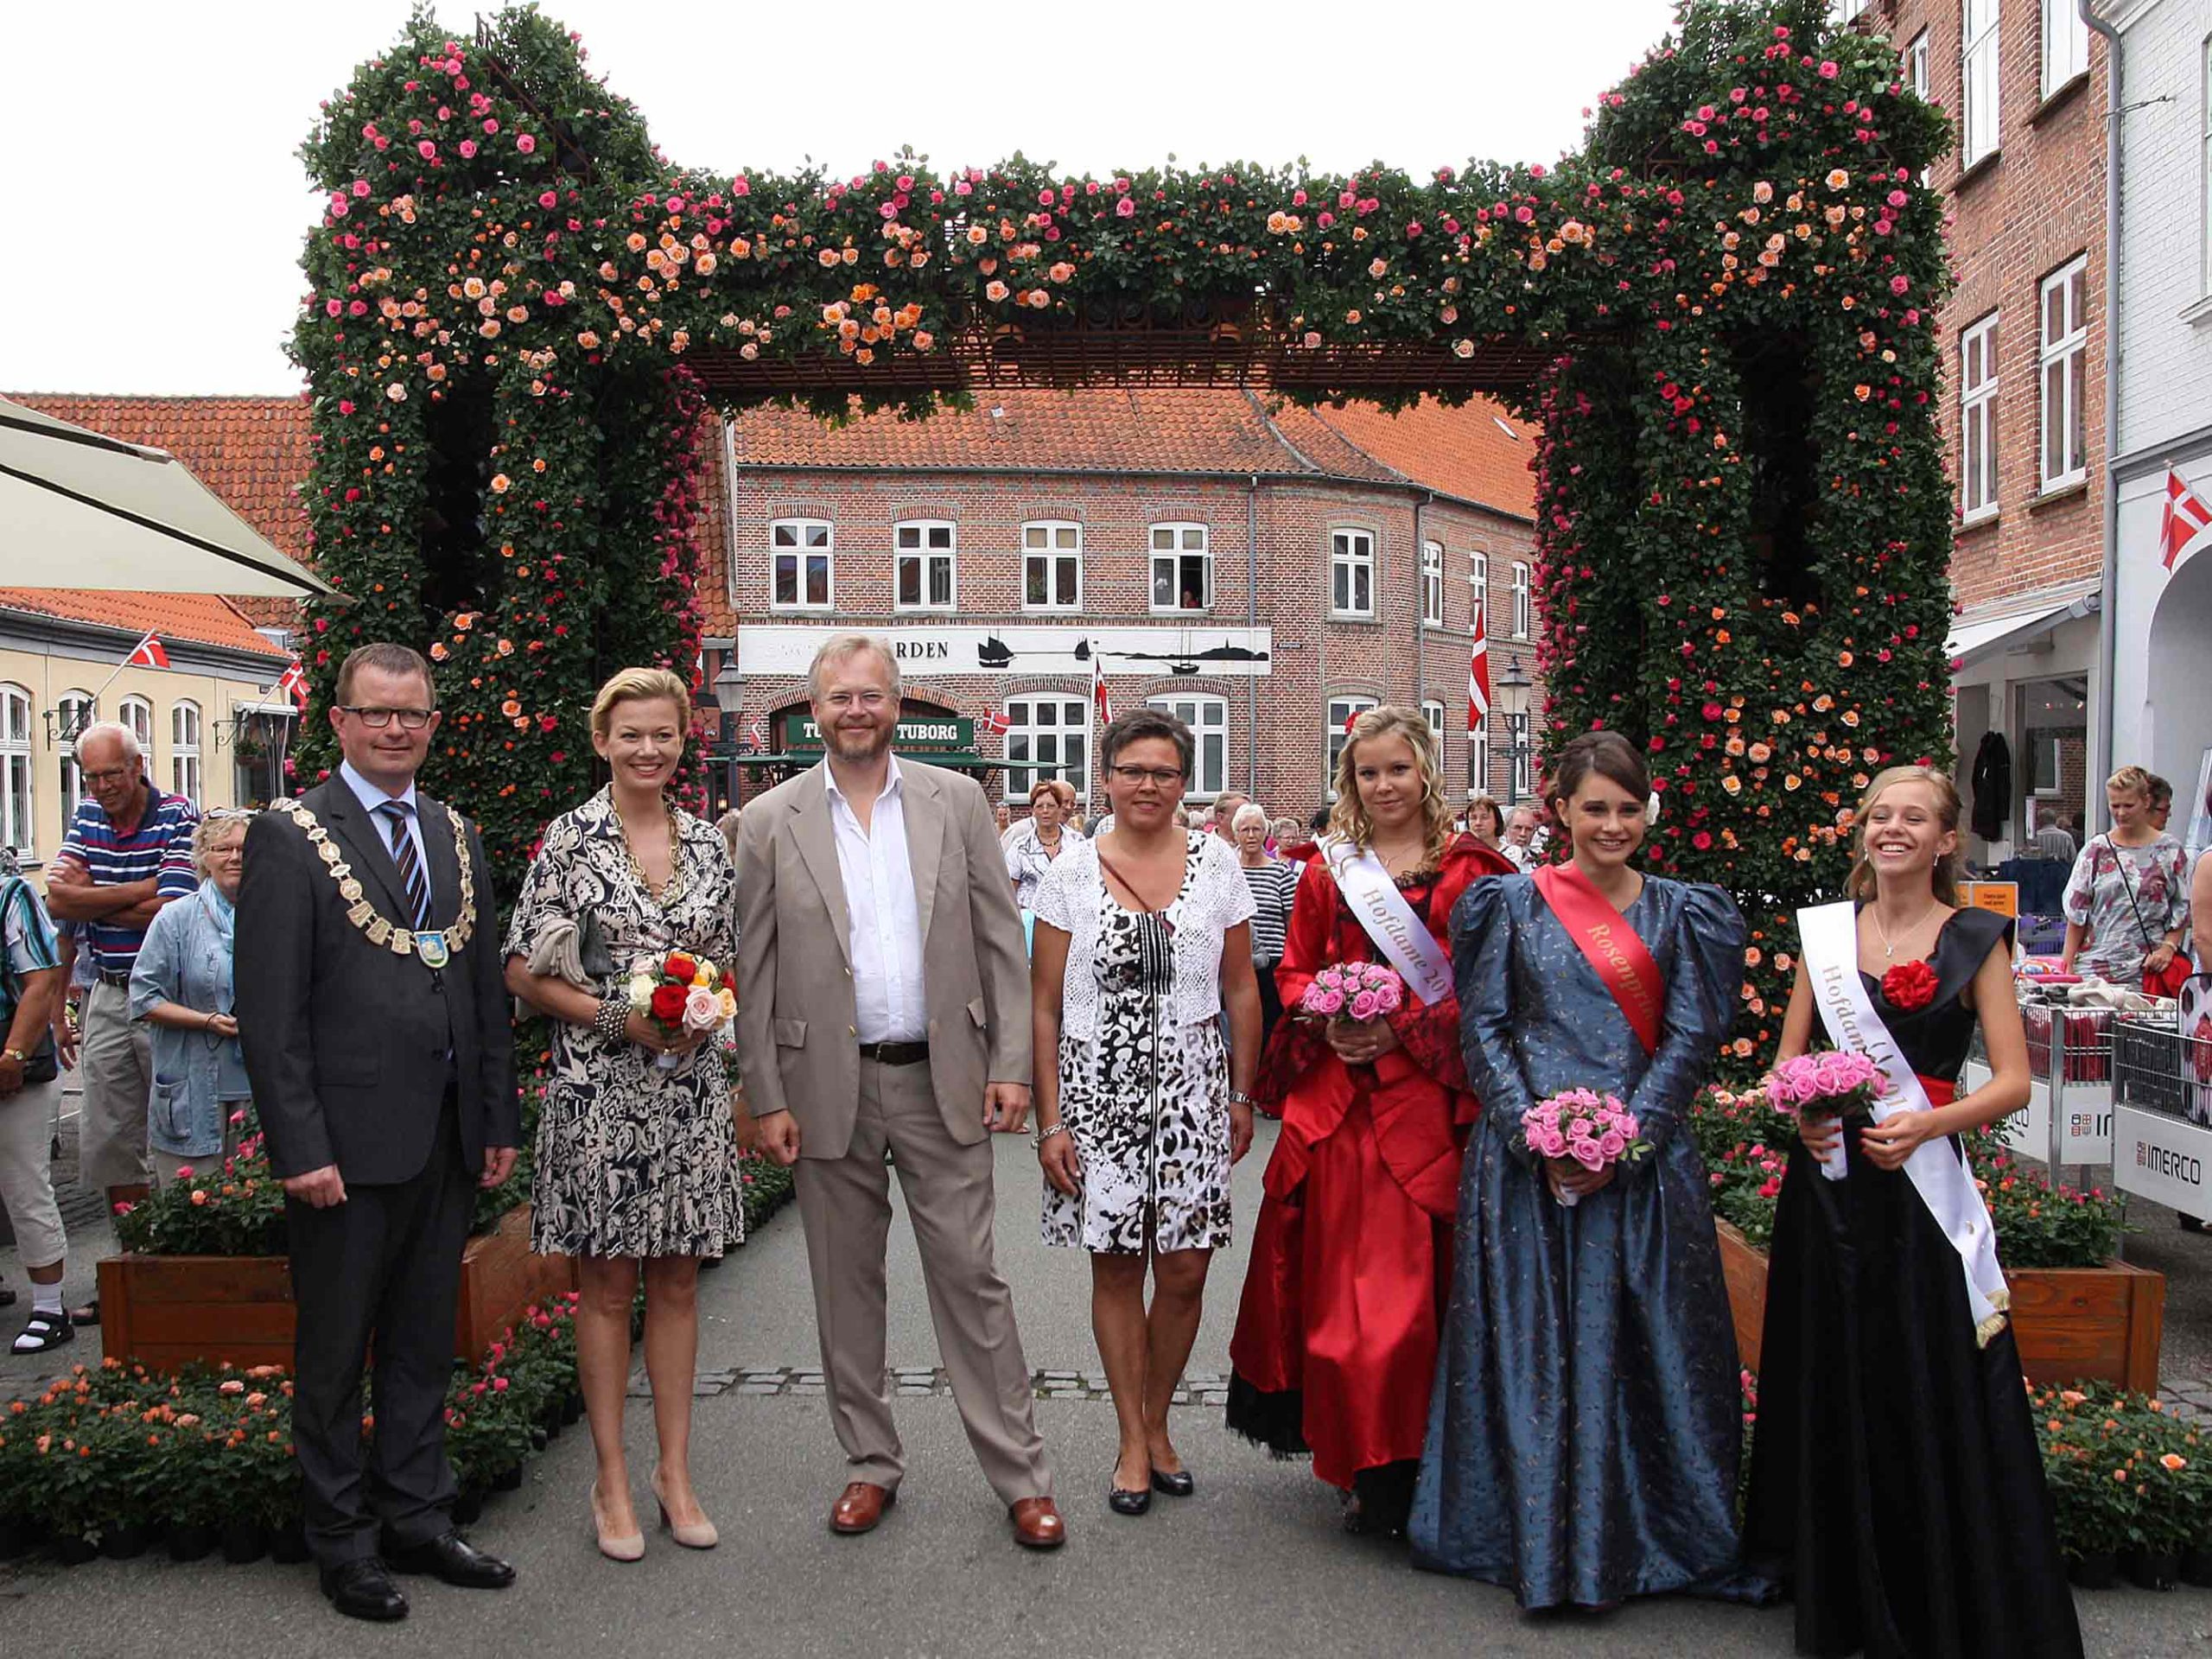 Ahlefeldtparret besøgte Rosenfestivalen på Nordfyn år 2012